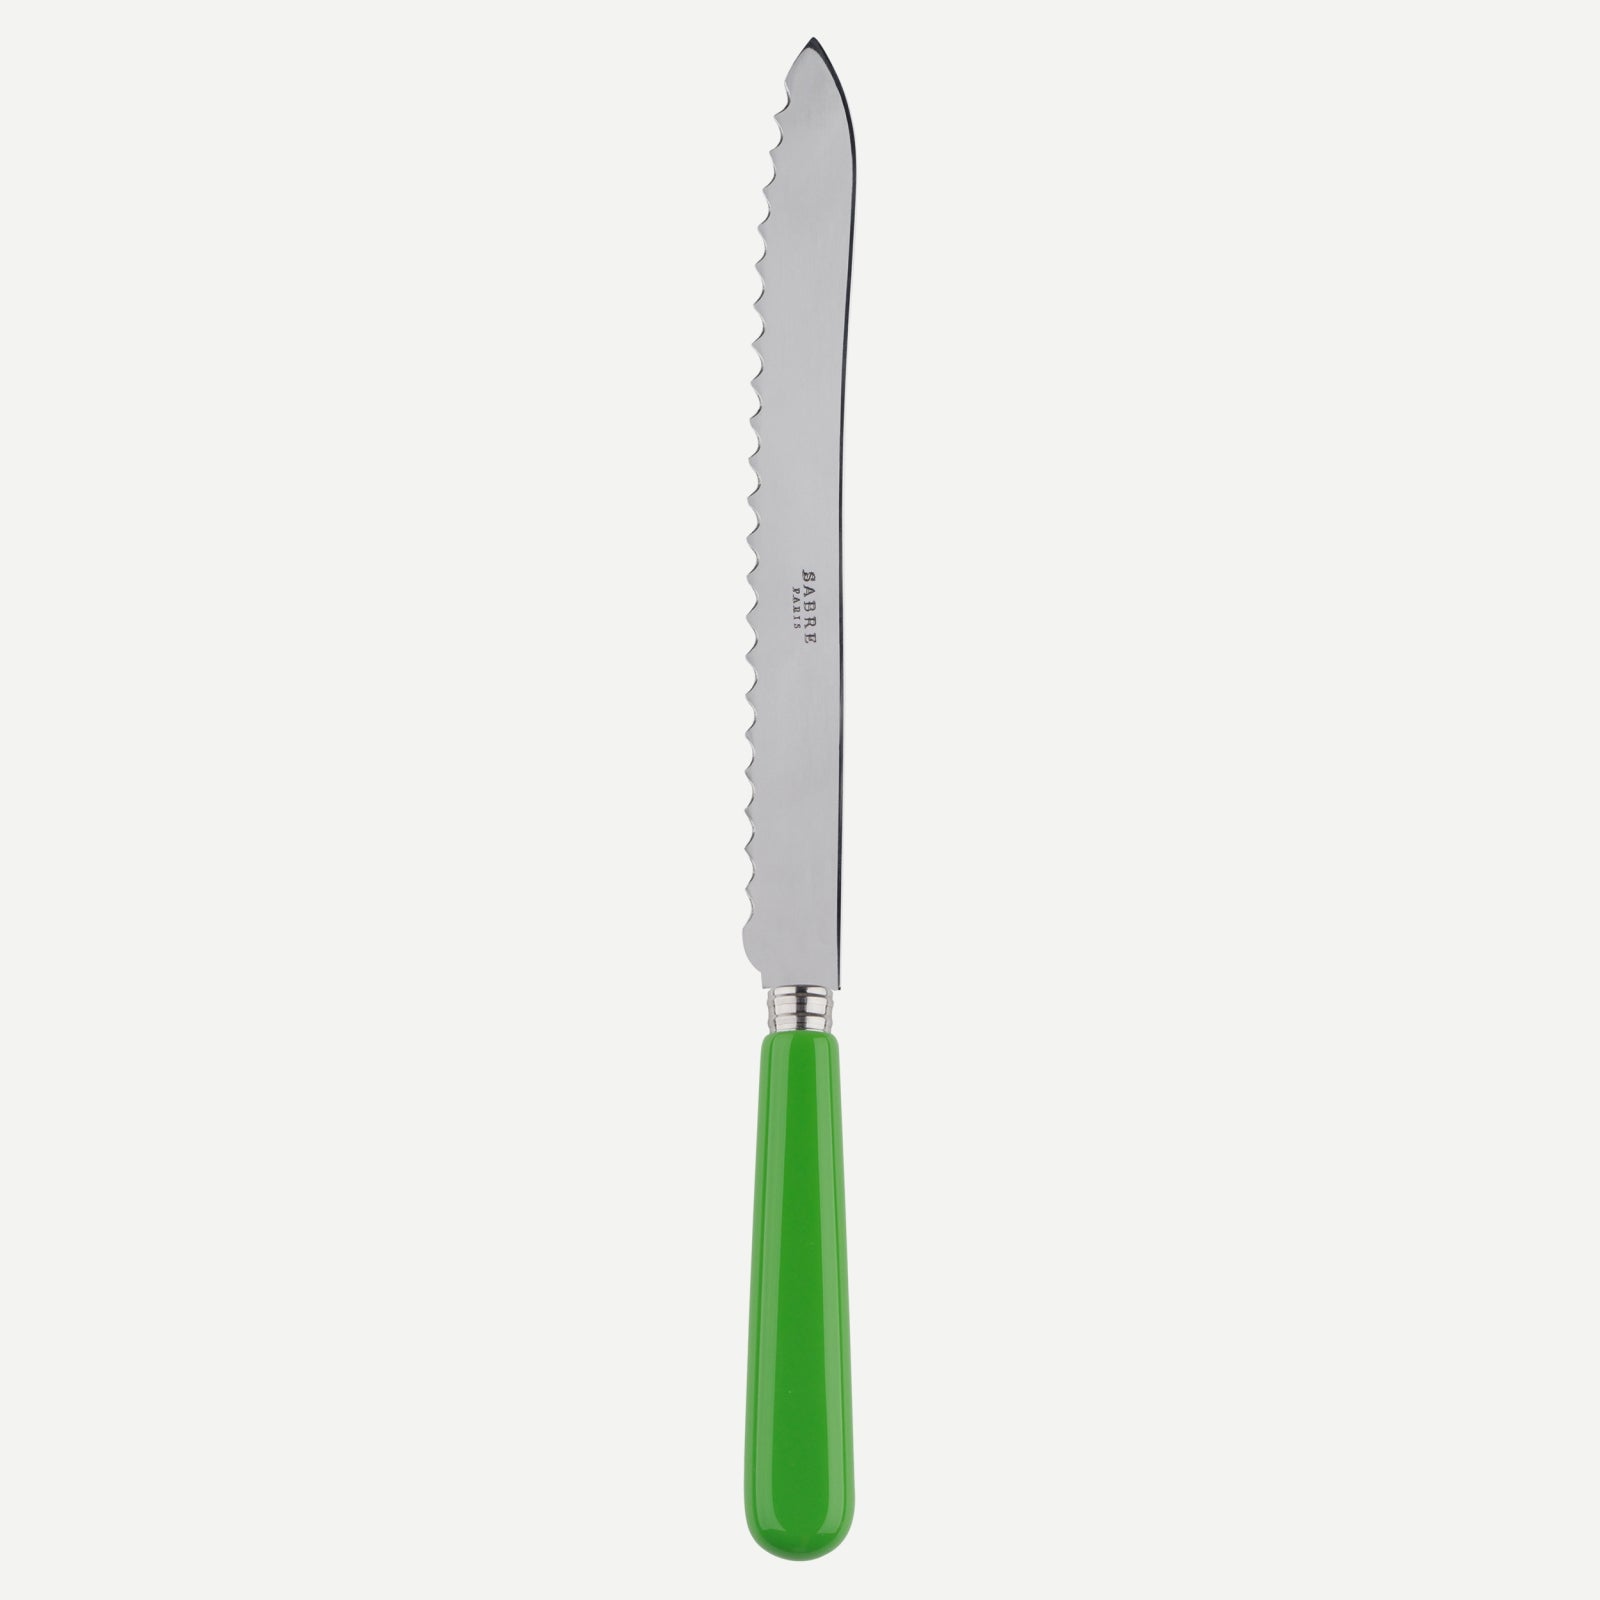 Bread knife - Pop unis - Streaming green